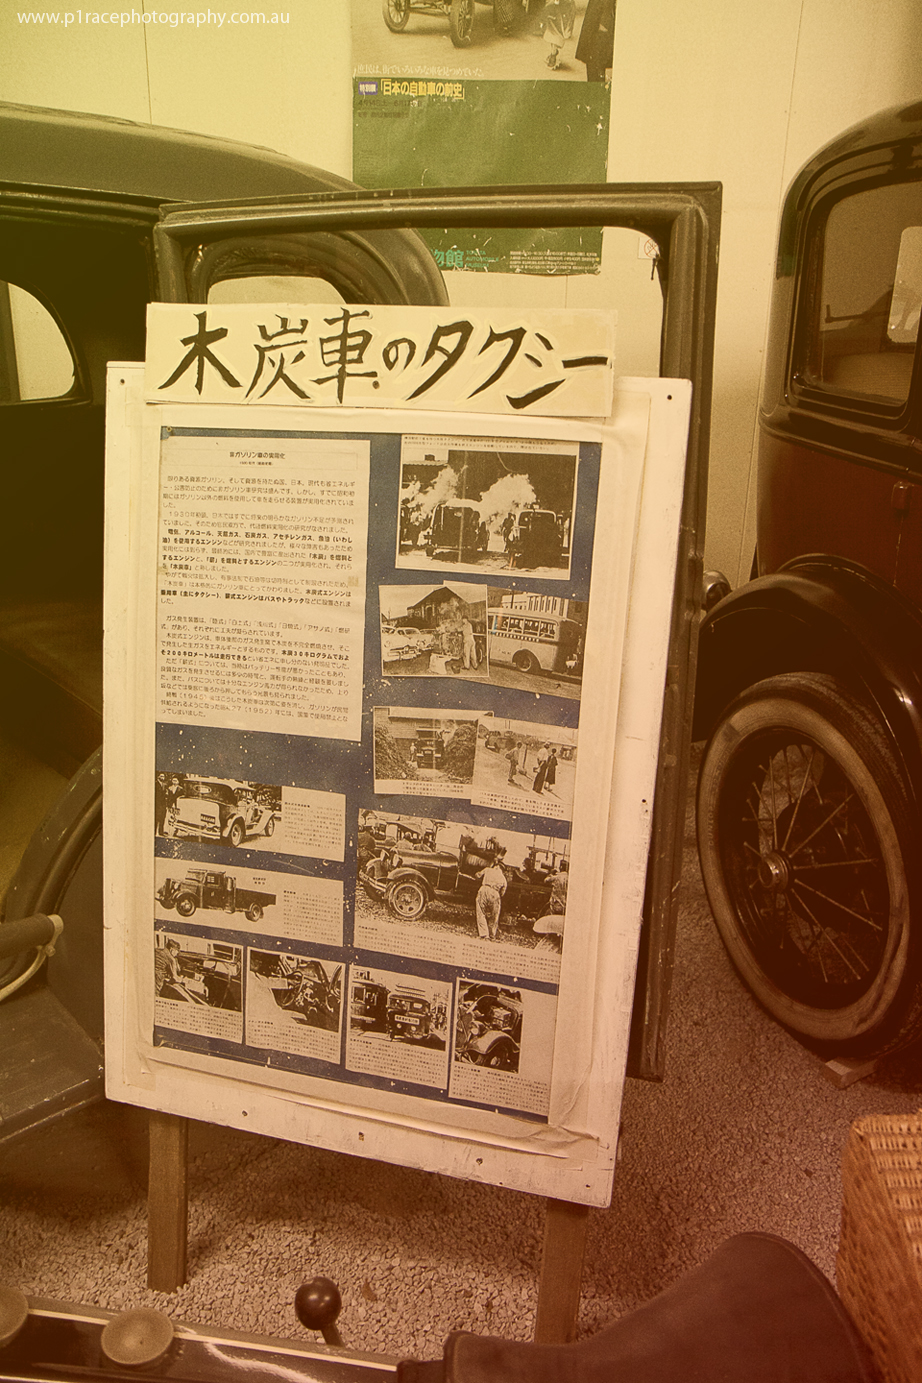 Kyushu jidousha rekishikan - 1934 Japan Ford charcoal powered taxi - photos of it in operation and history 1